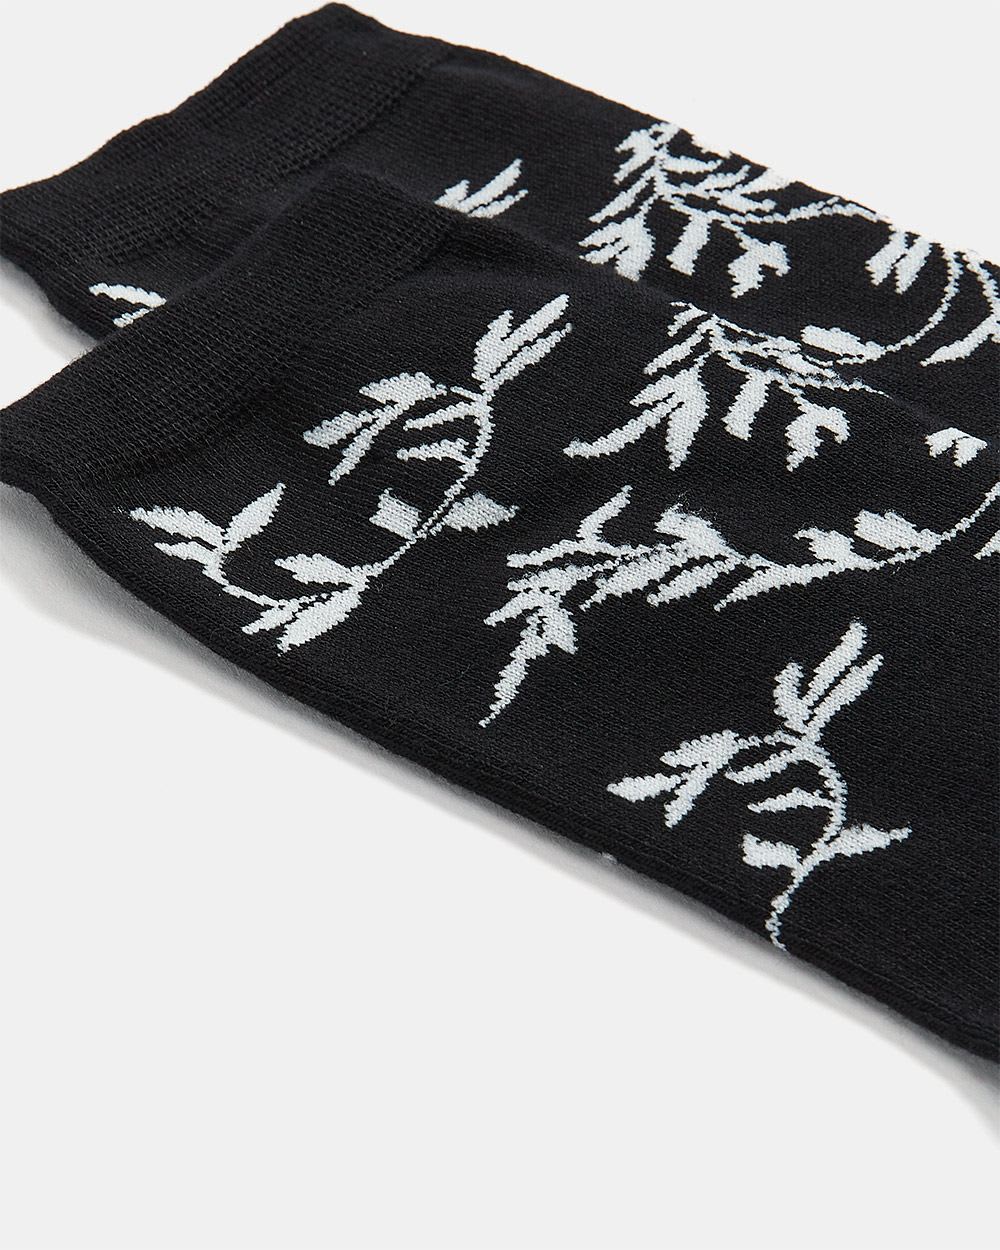 Black and White Floral Crew Socks